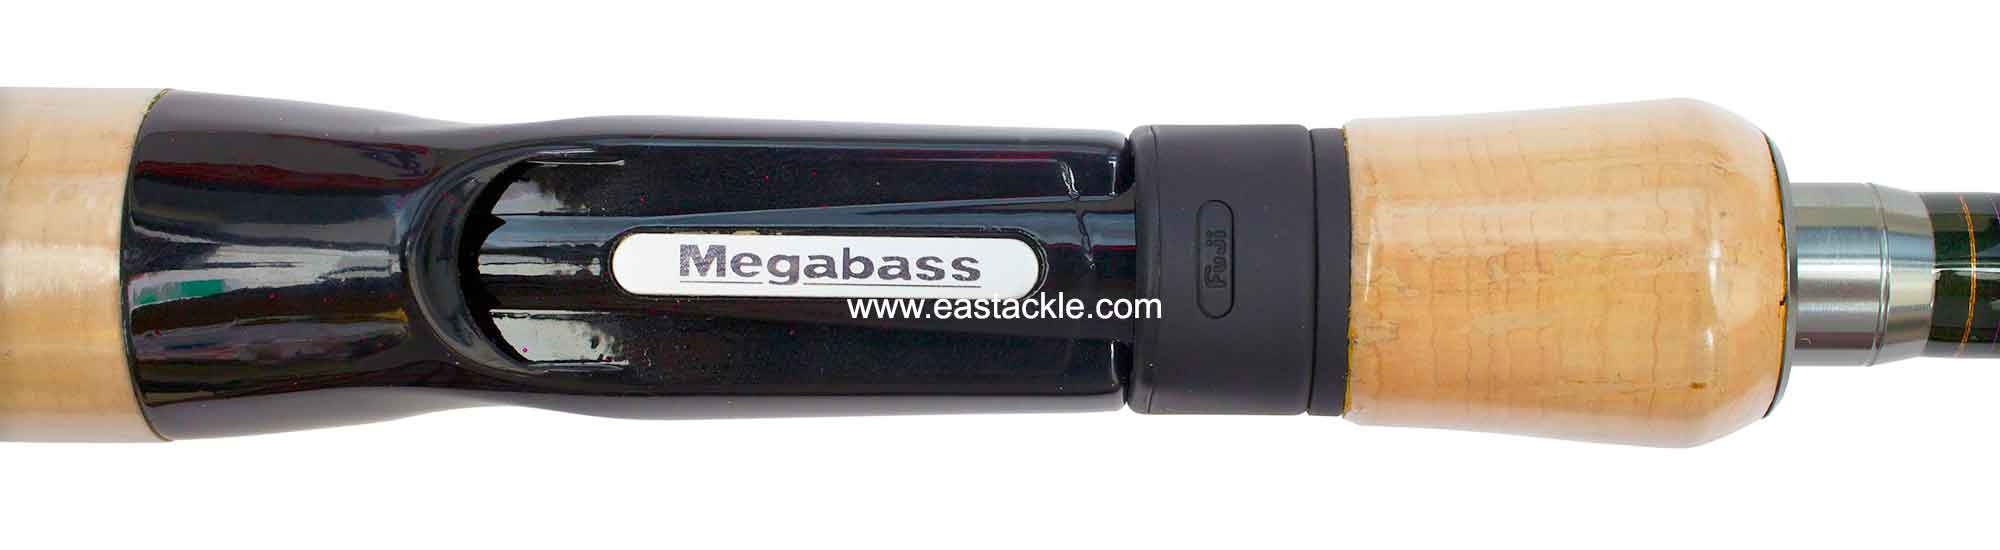 Megabass - Orochi XX - F5-610XX - SPINNERBAIT SPECIAL - Bait Casting Rod - Reel Seat (Top View)